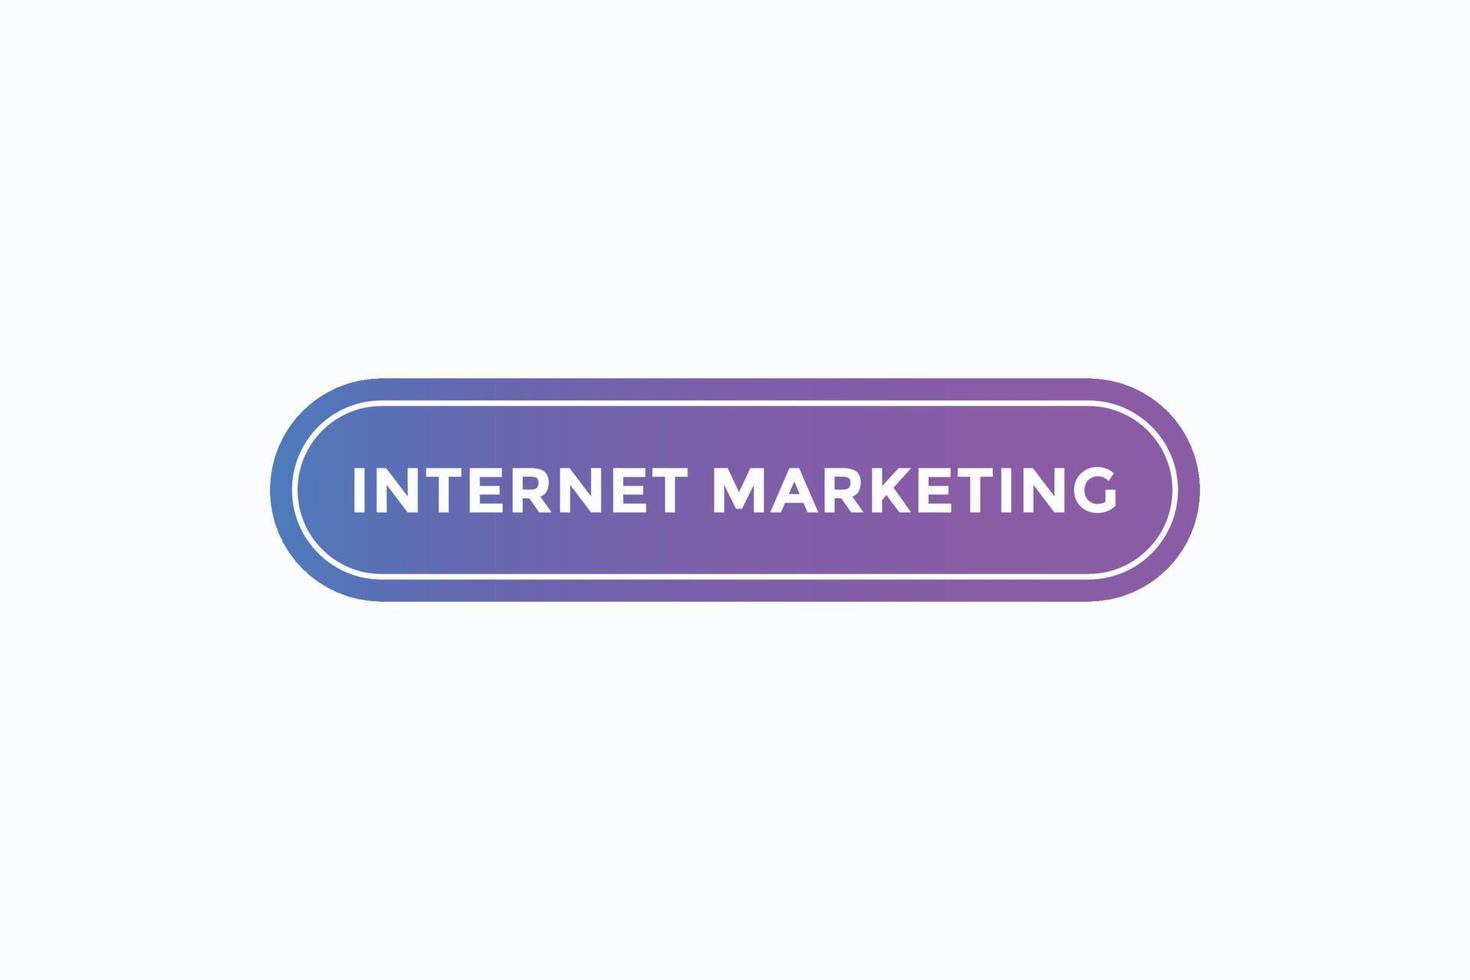 vectores de botones de marketing en Internet. signo etiqueta discurso burbuja internet marketing